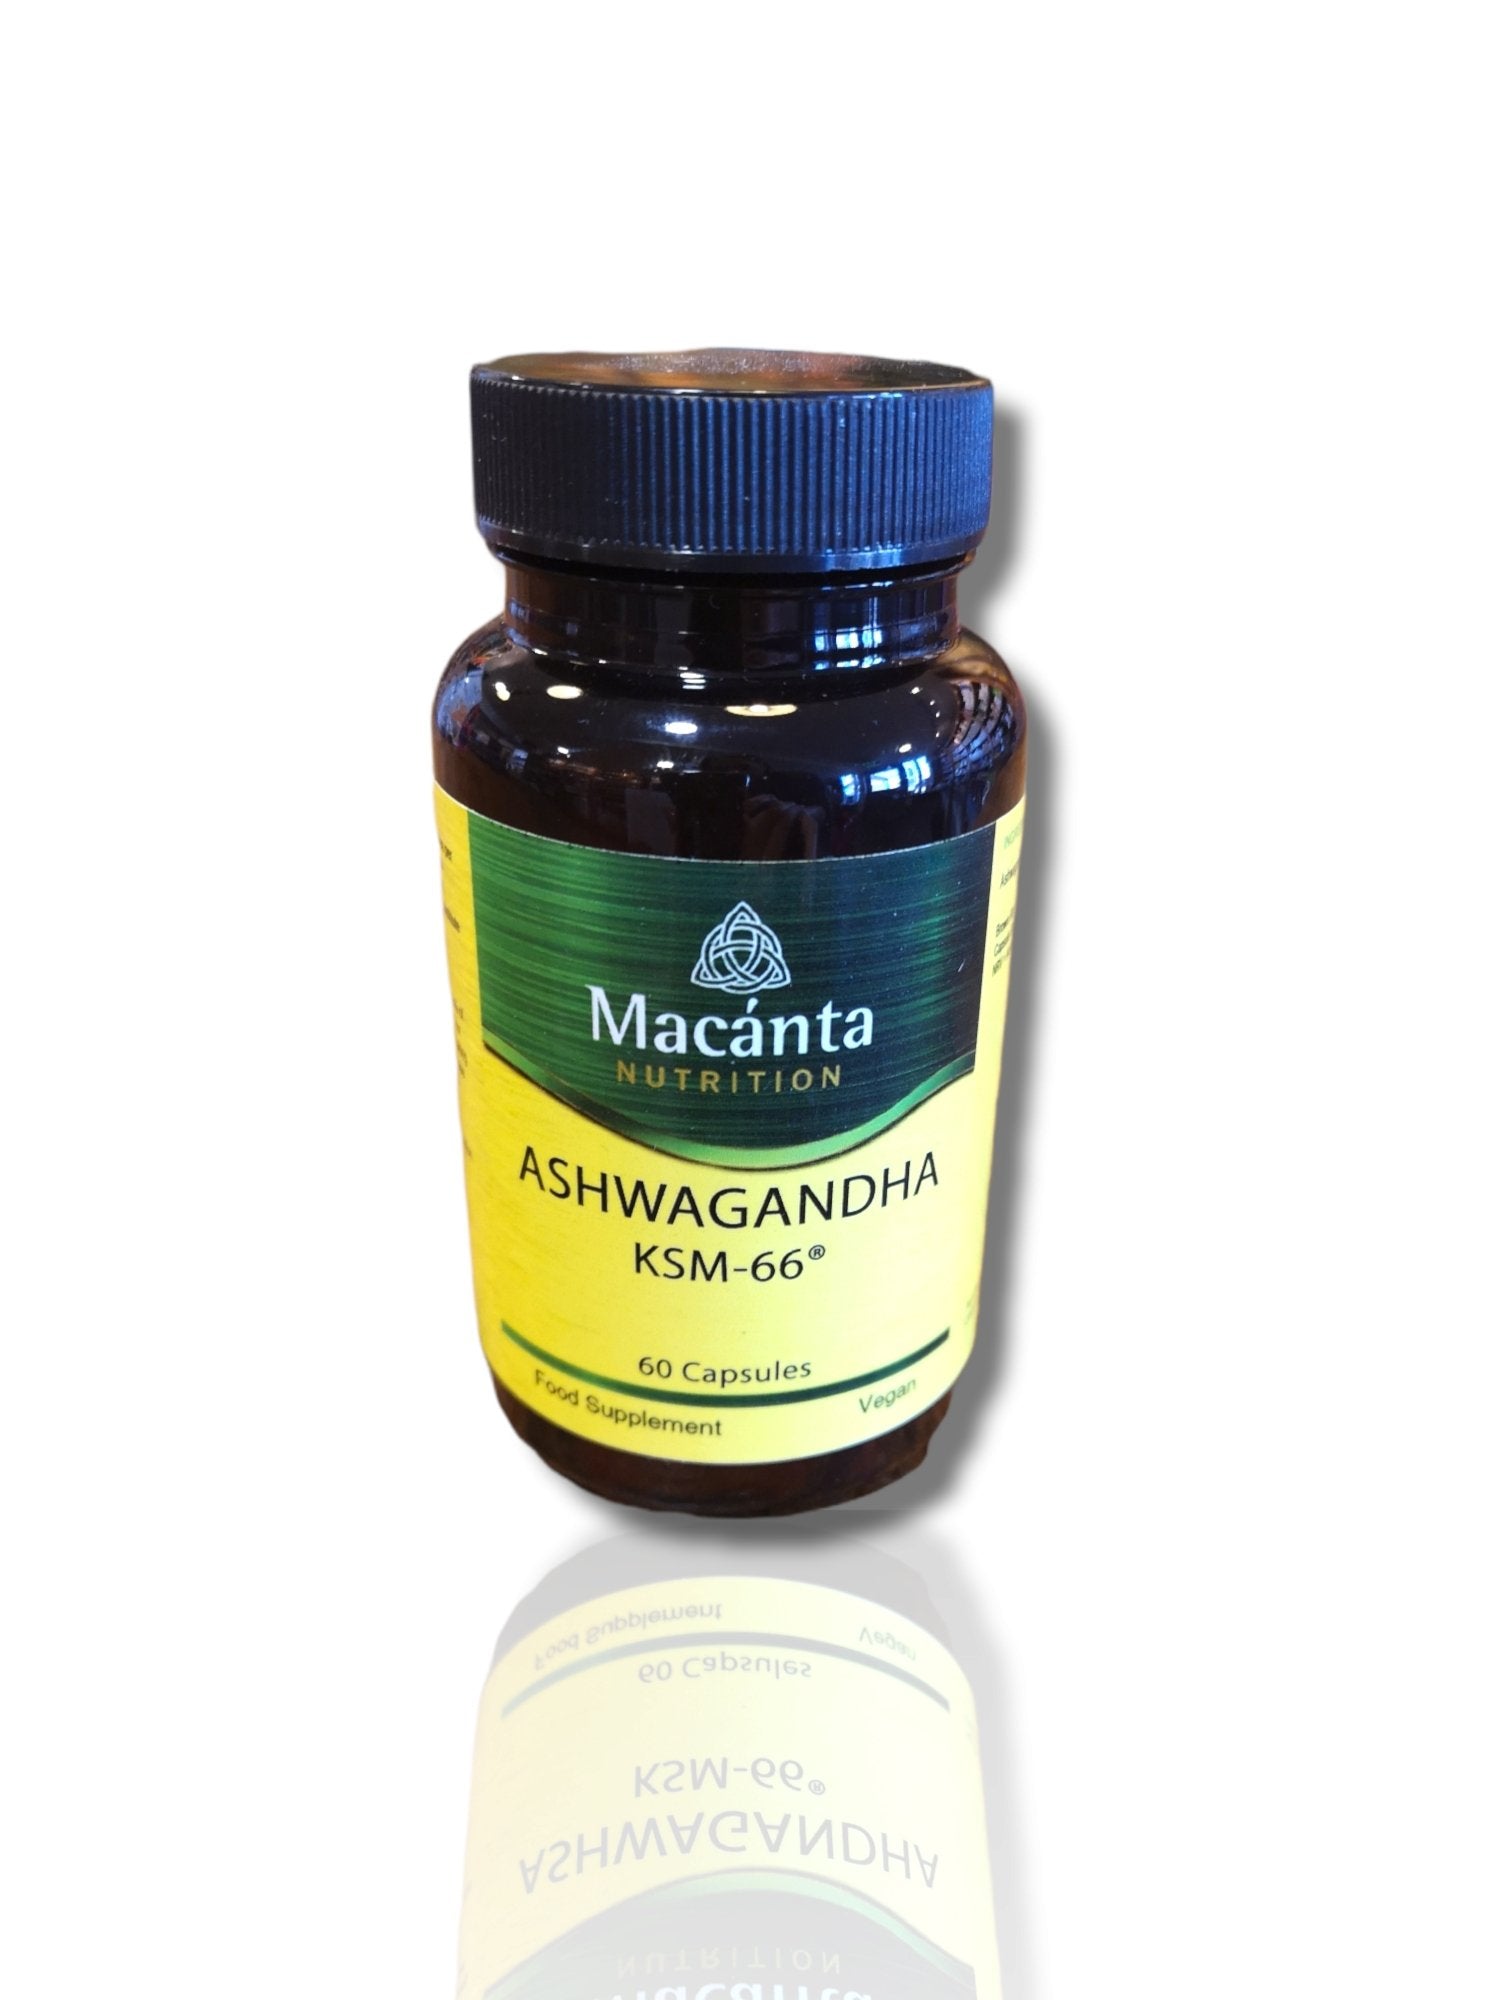 Macanta Ashwagandha KSM-66 60cap - HealthyLiving.ie